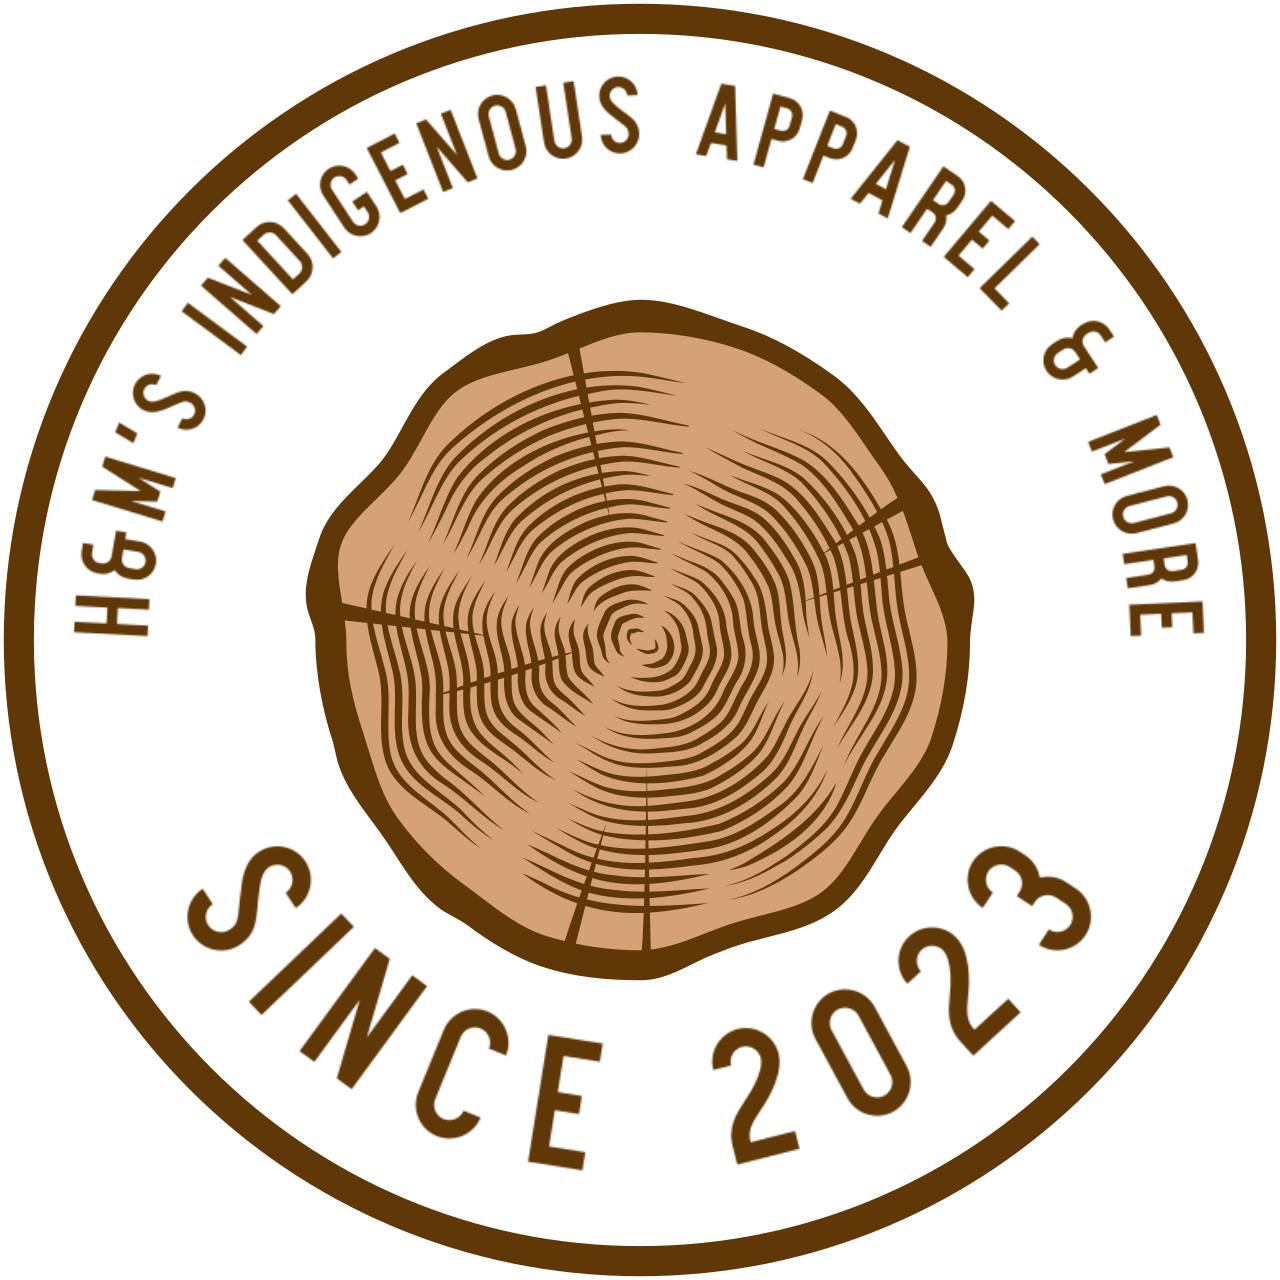 H&M’s Indigenous Apparel & More's logo